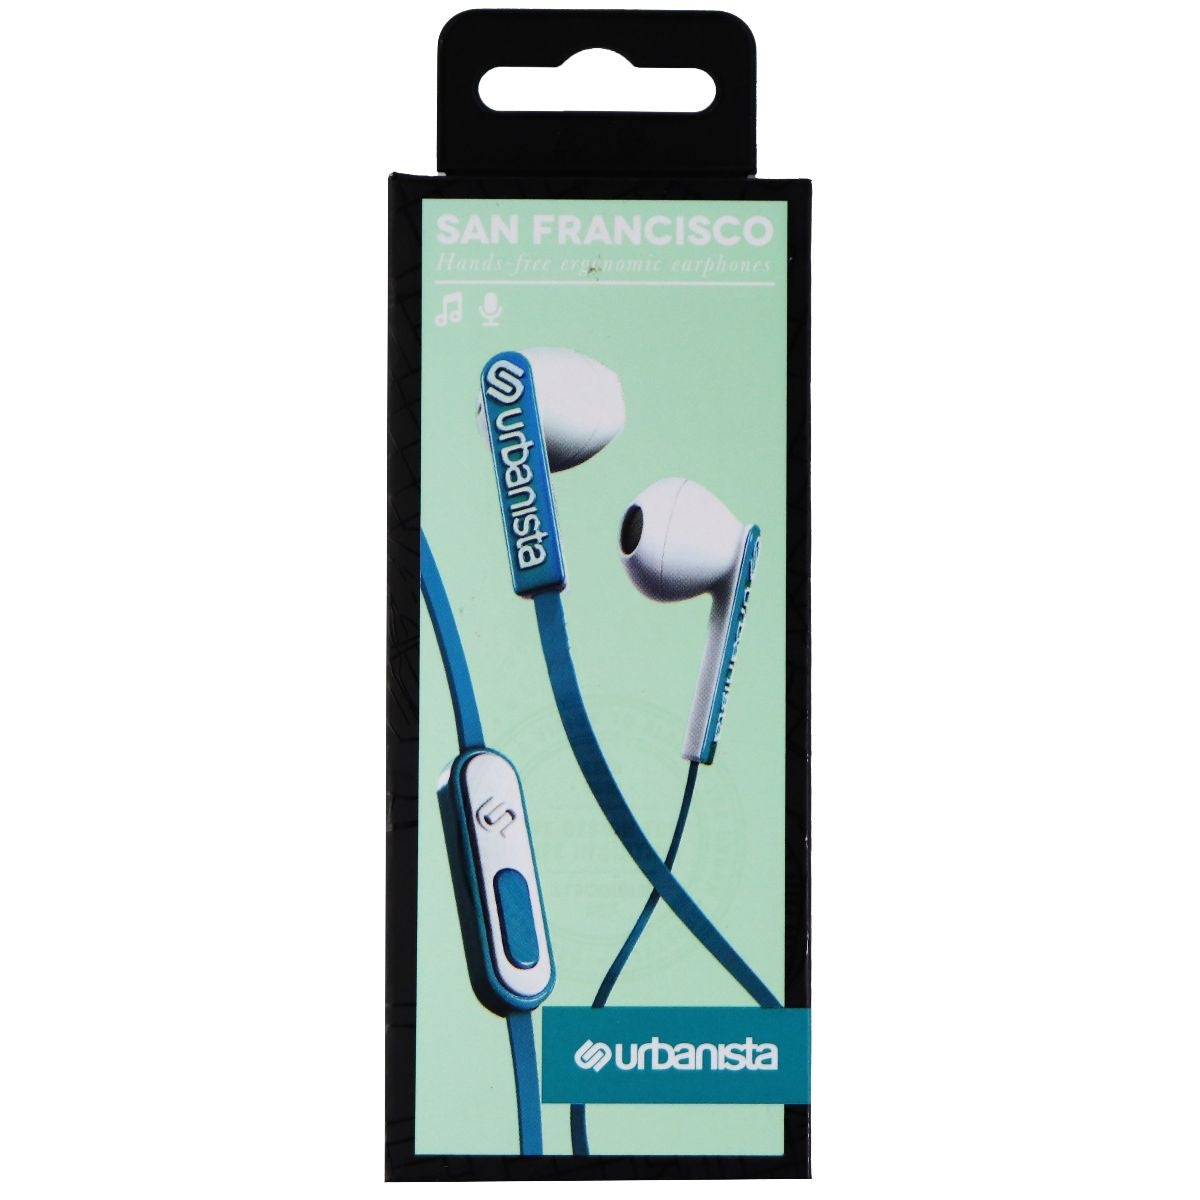 Urbanista San Francisco Earphones with Remote & Mic - Coral Island/Turquoise Portable Audio - Headphones Urbanista    - Simple Cell Bulk Wholesale Pricing - USA Seller